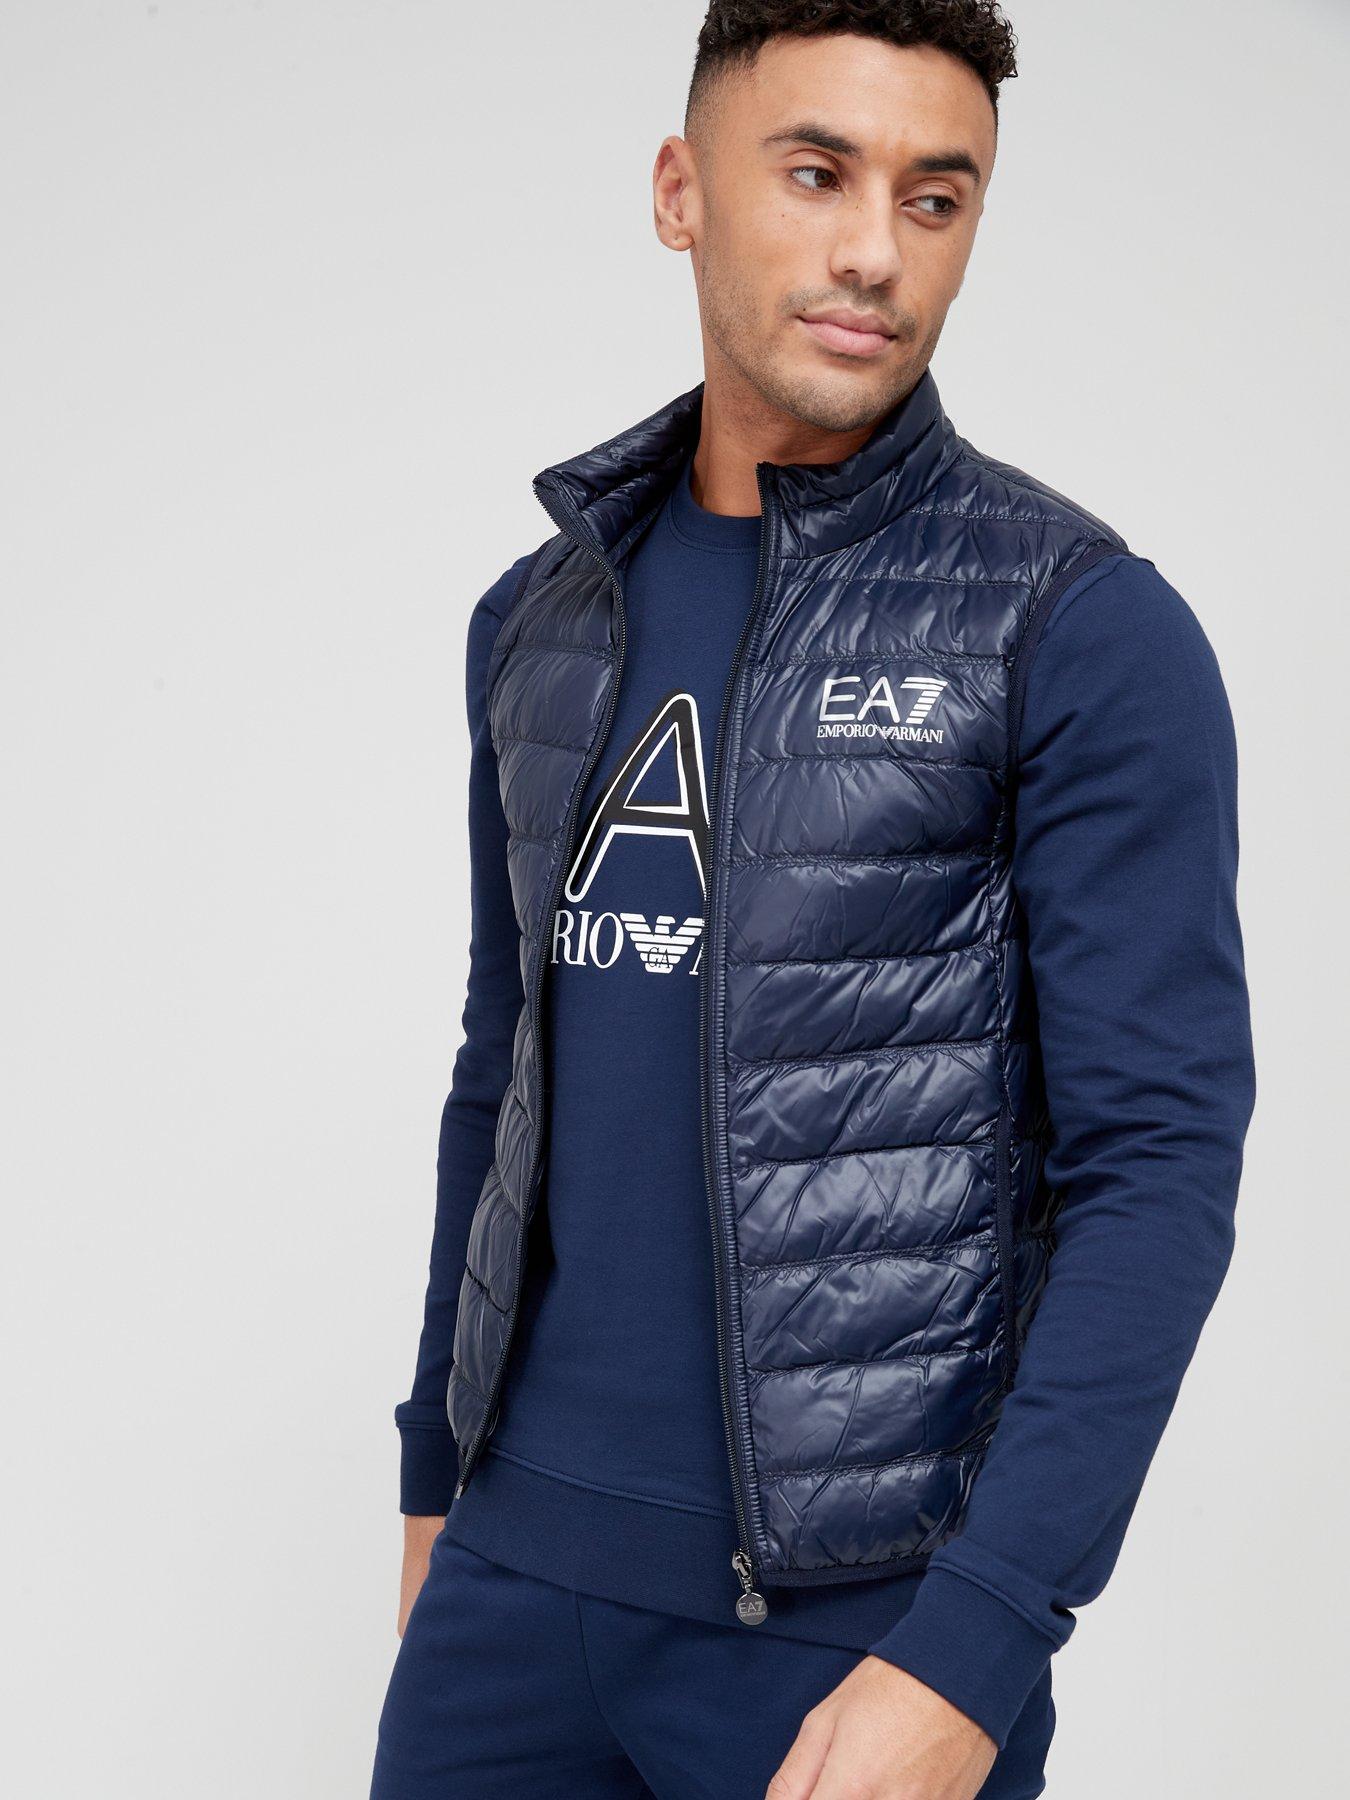 Ea7 emporio armani | Coats & jackets | Men 